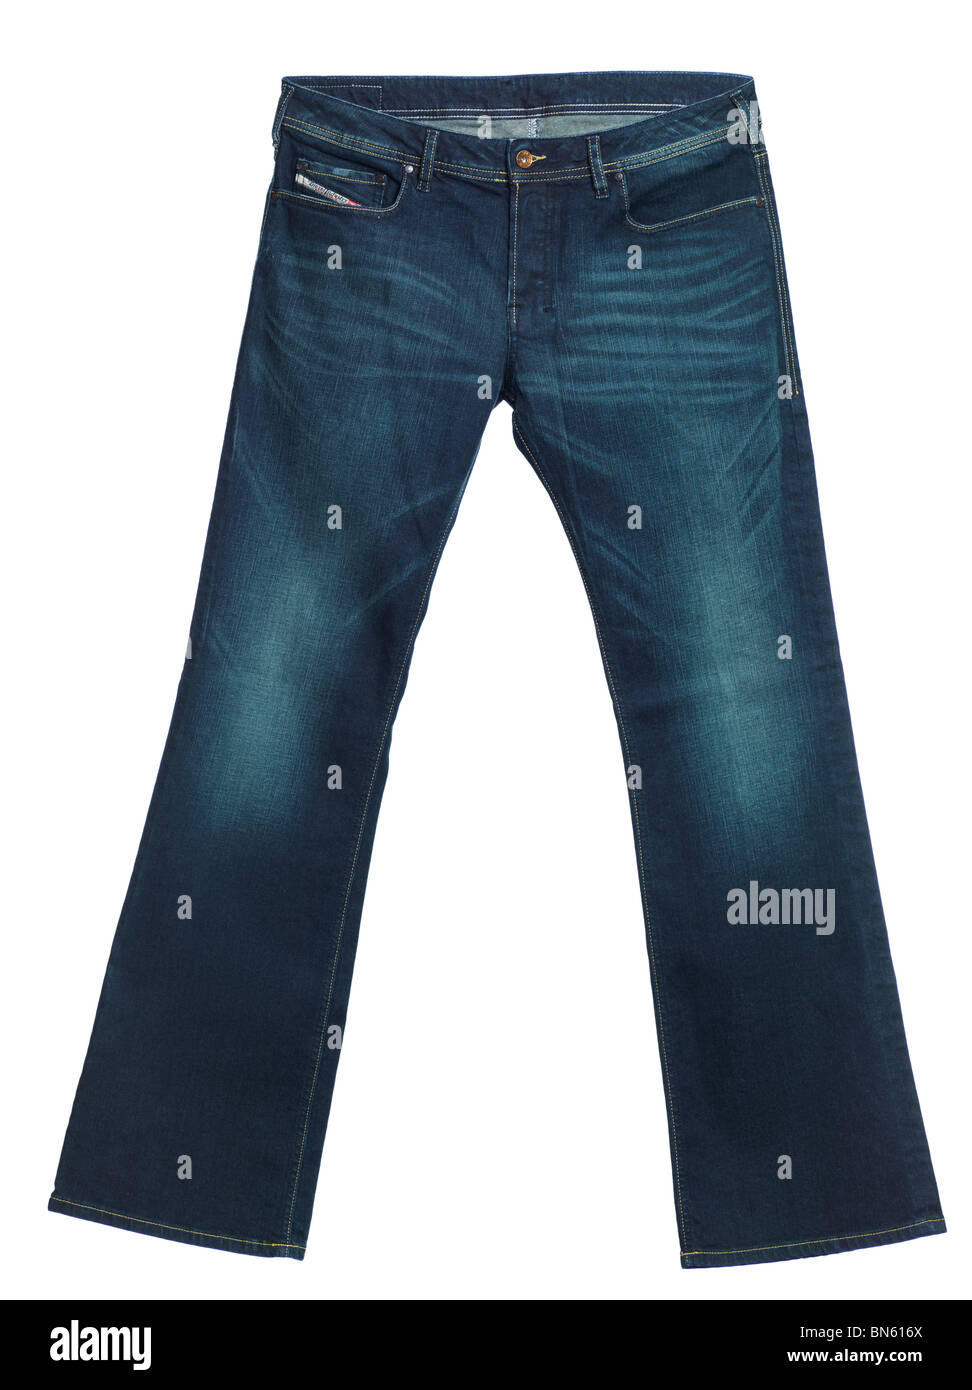 Pantalones de corte de bota fotografías e imágenes de alta resolución -  Alamy